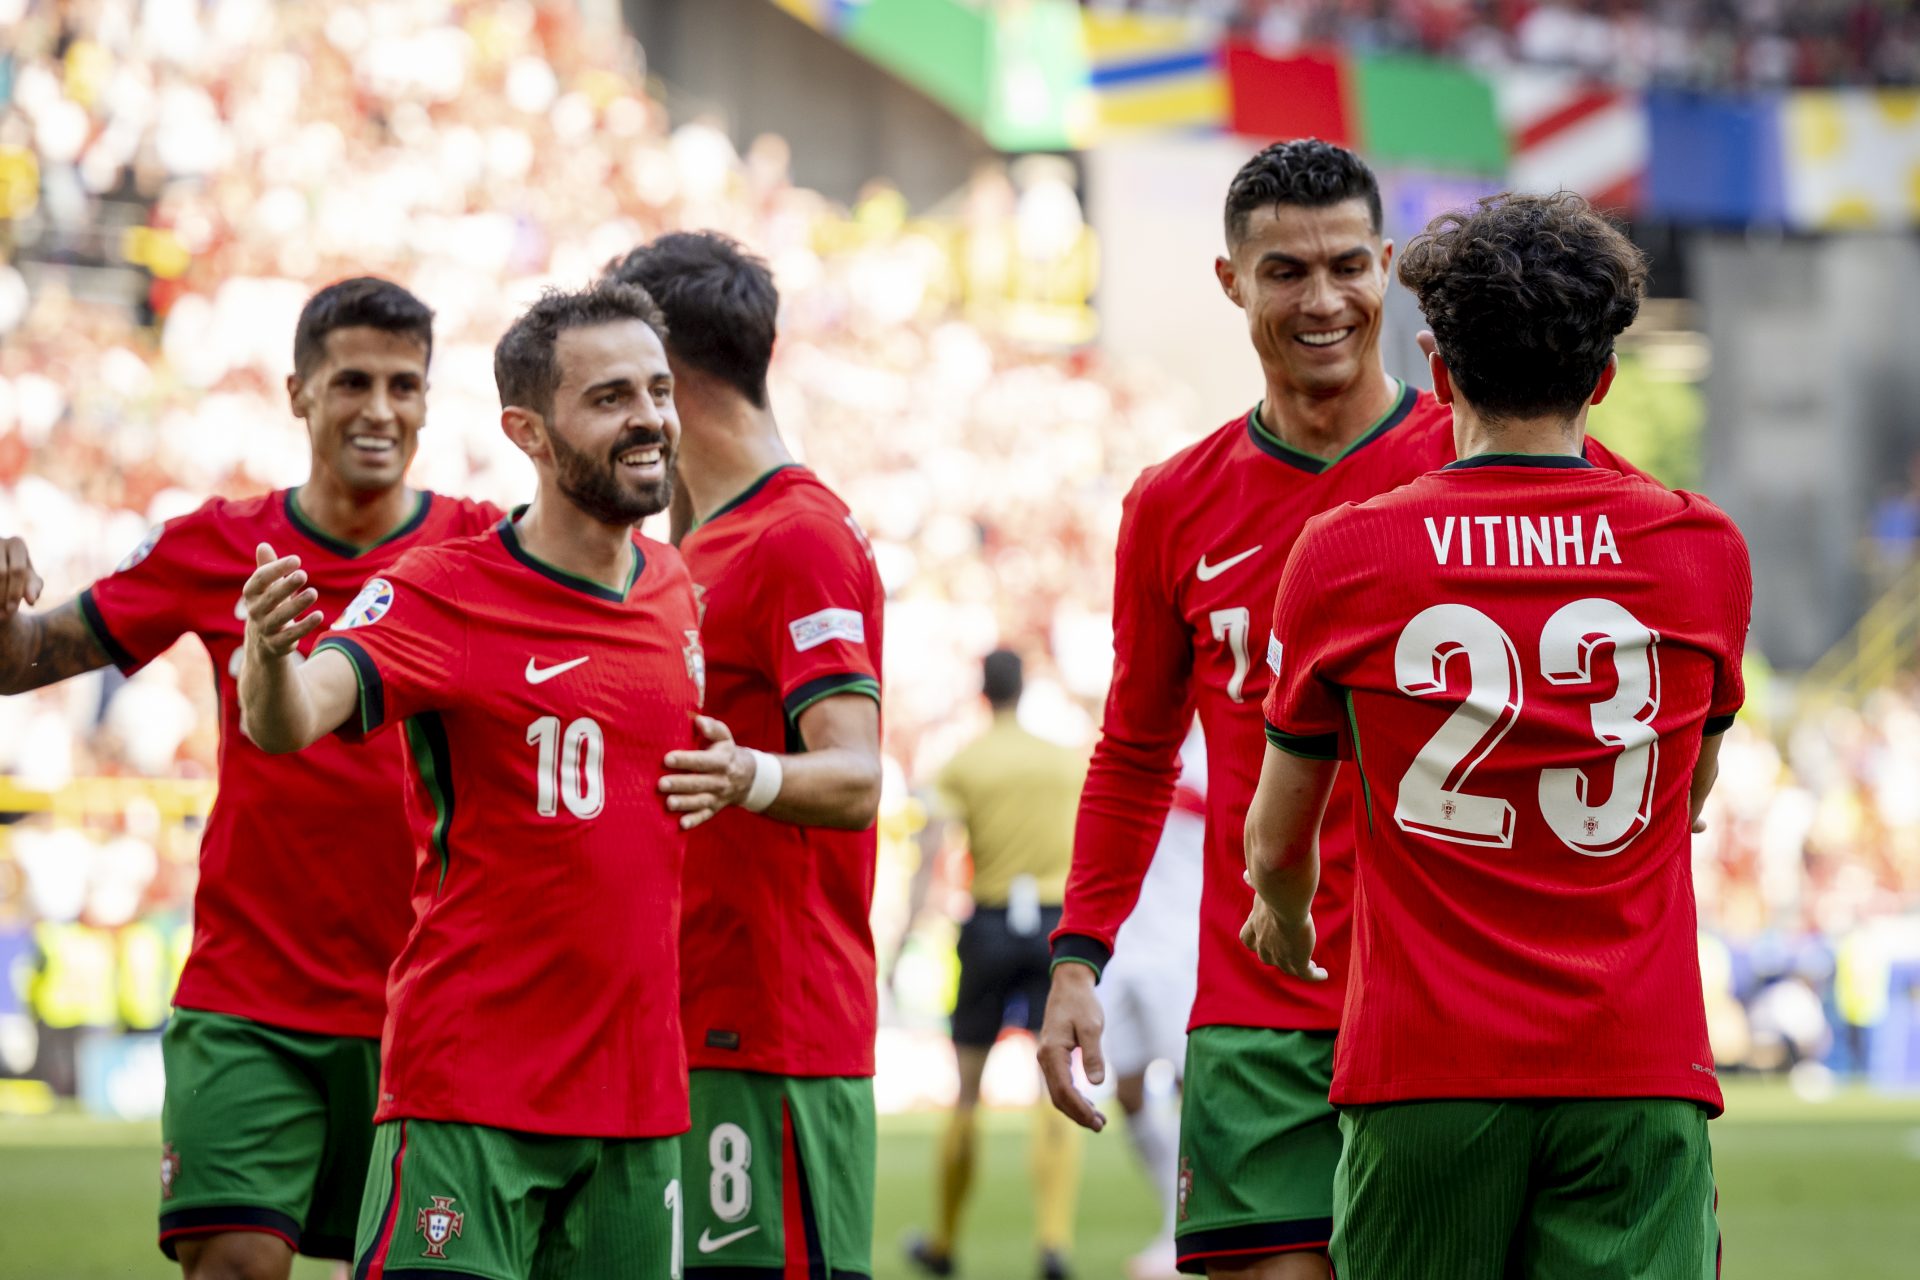 Portugal vs Slovenia (2-1 AET)